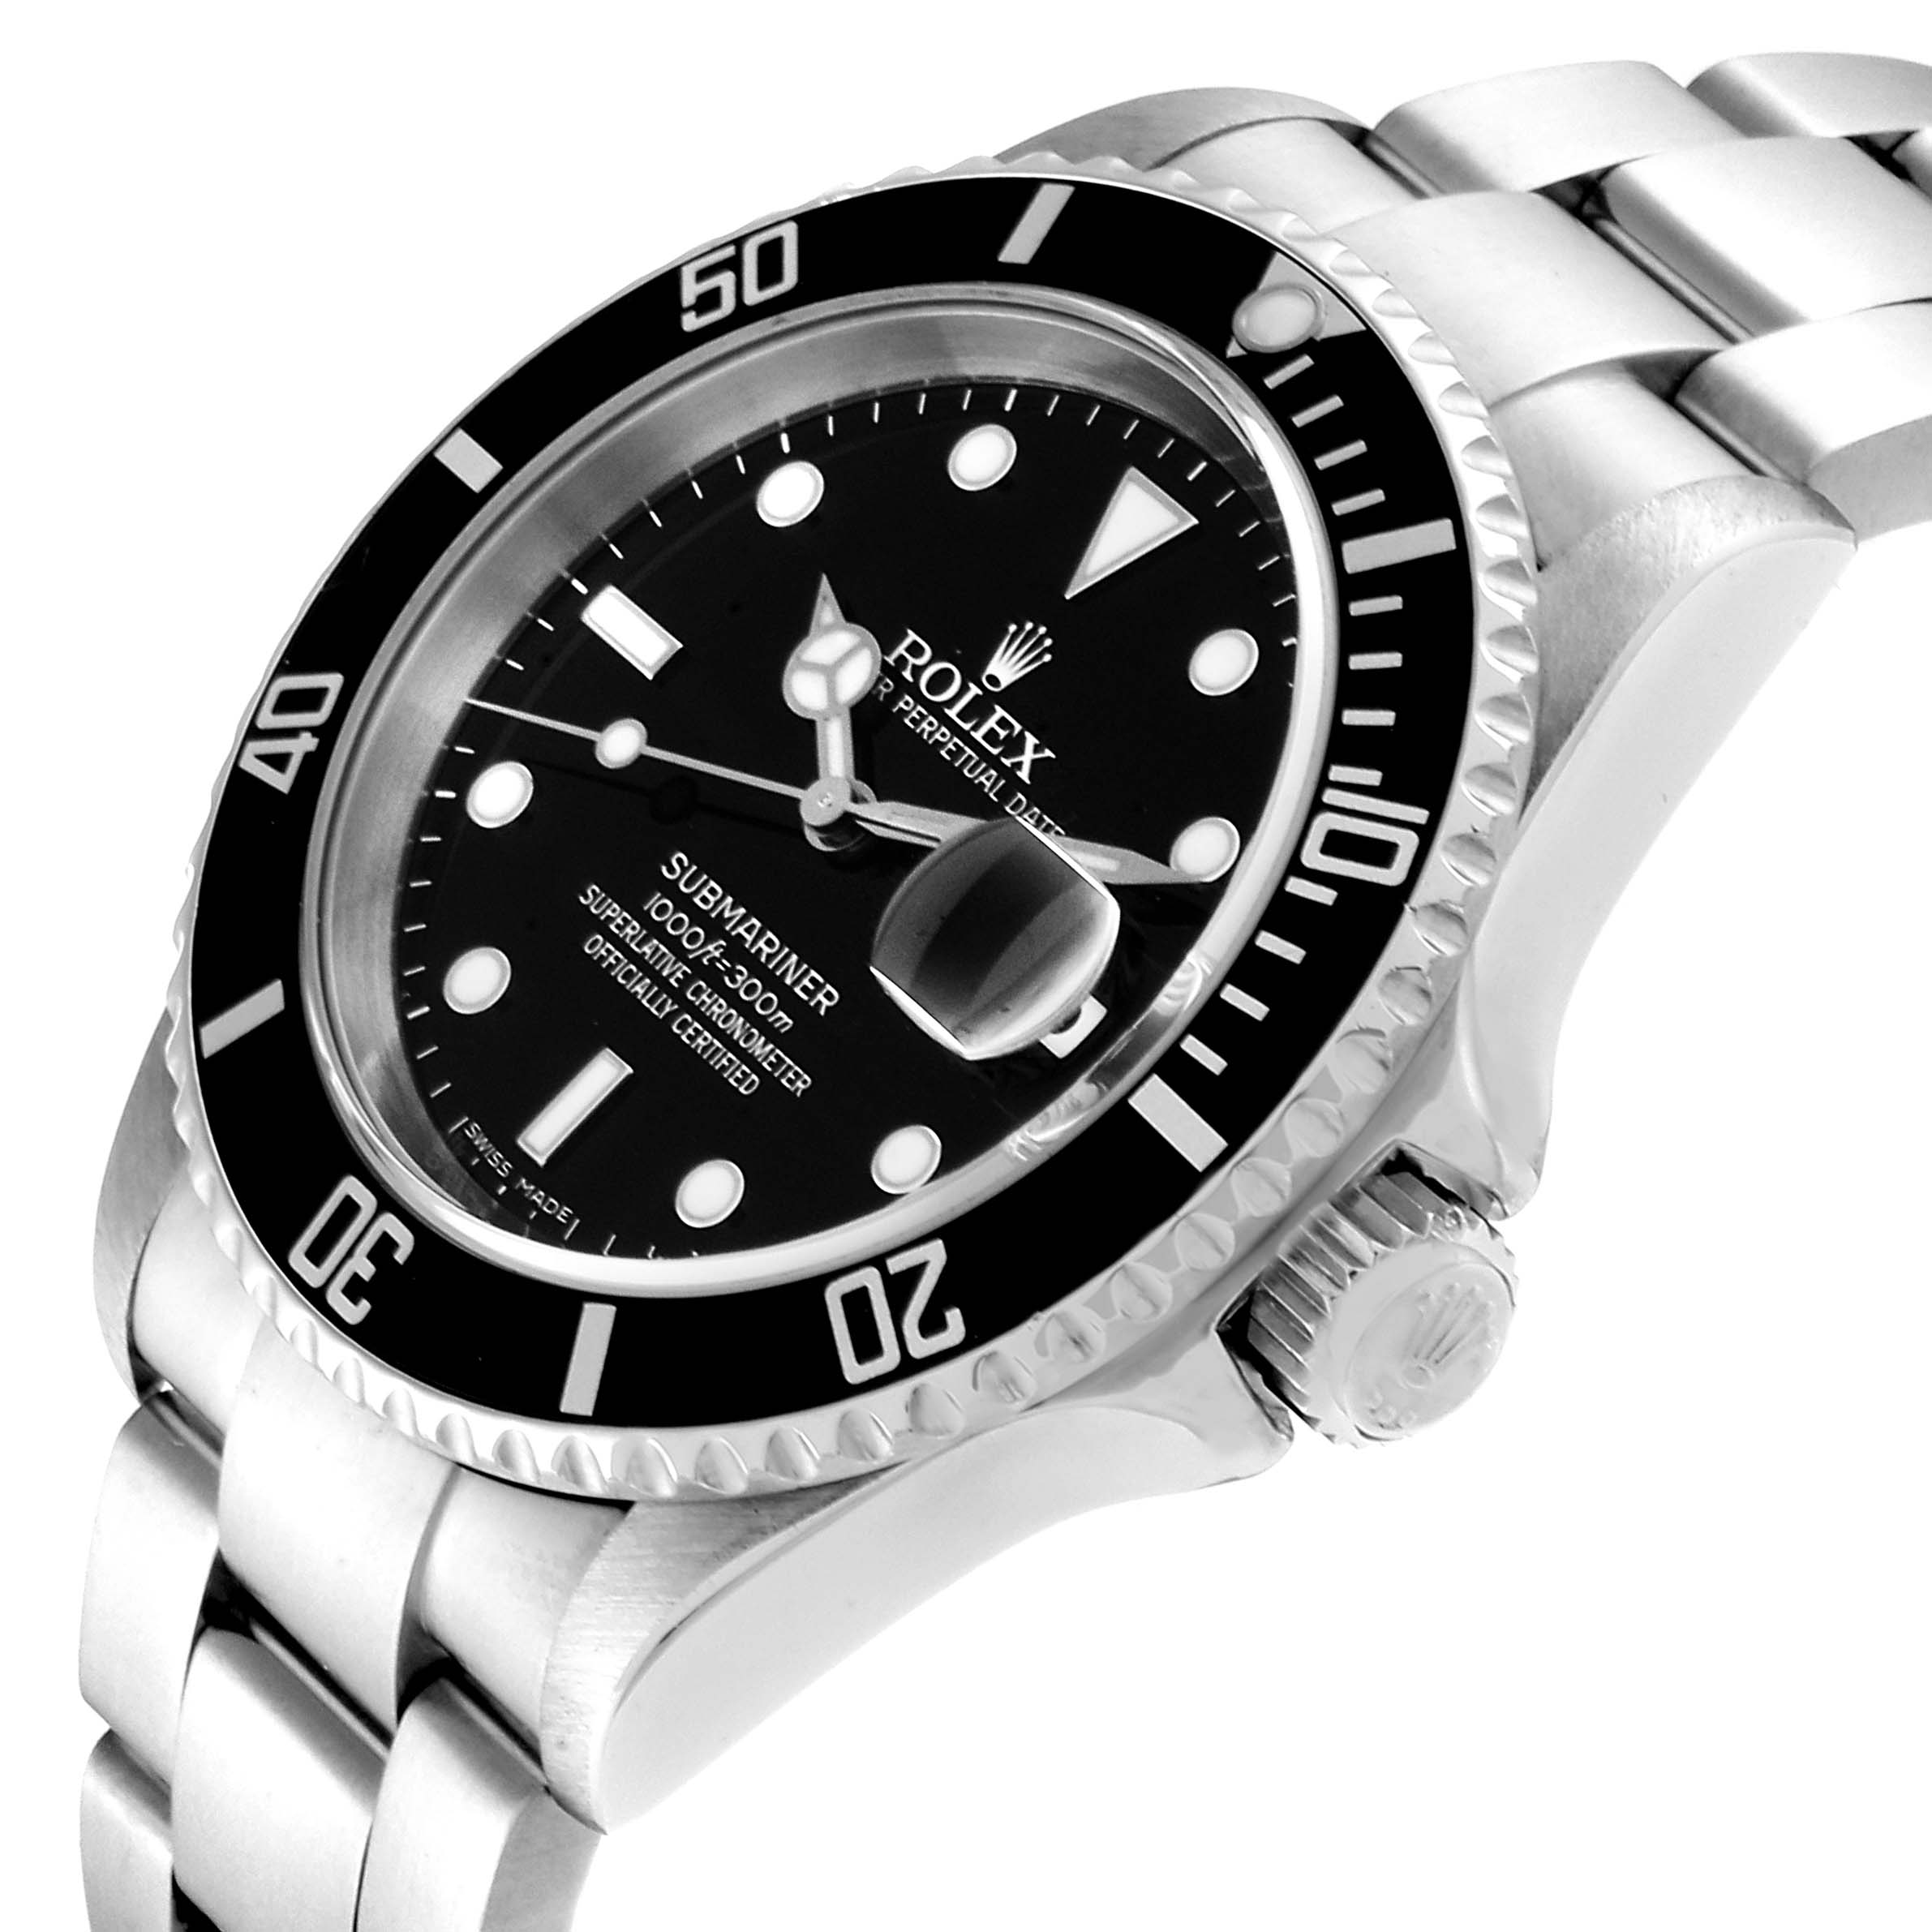 Rolex Submariner Date 40mm Stainless Steel Mens Watch 16610 Rolex Submariner Date Stainless Steel